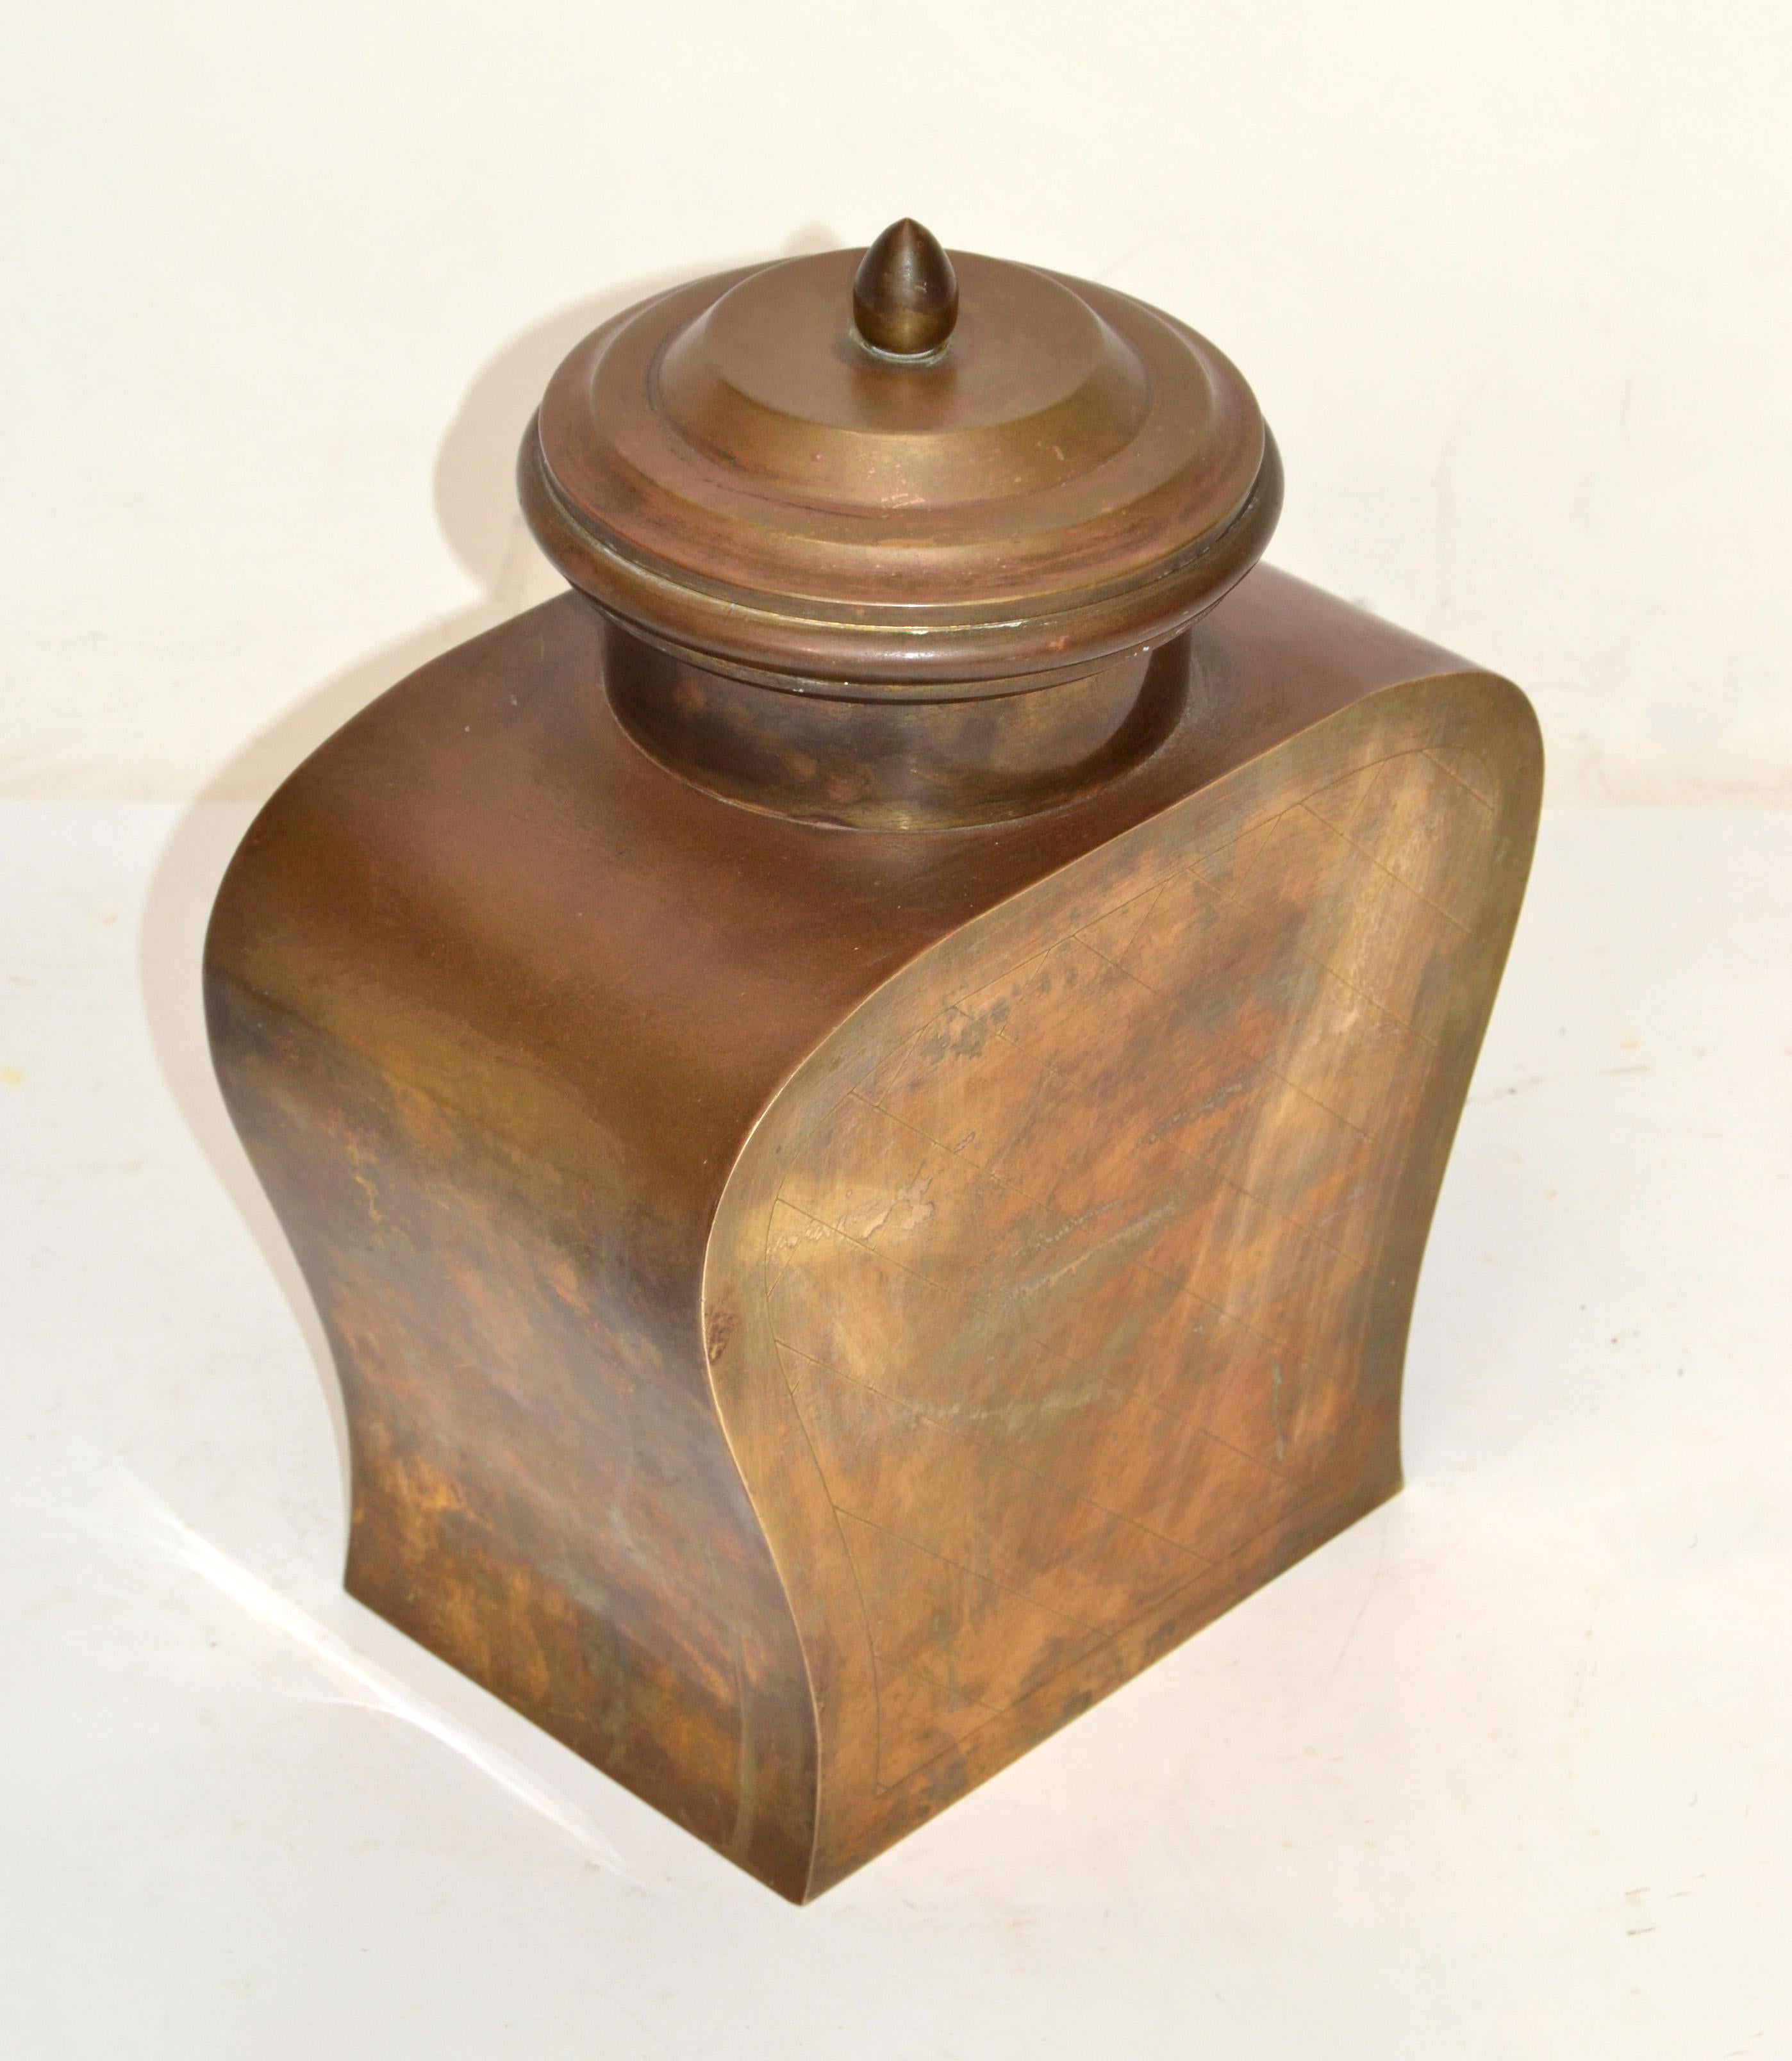 Lidded Tinned Brass Urn Asian Influenced Mid-Century Modern Vessel, 1960 For Sale 1